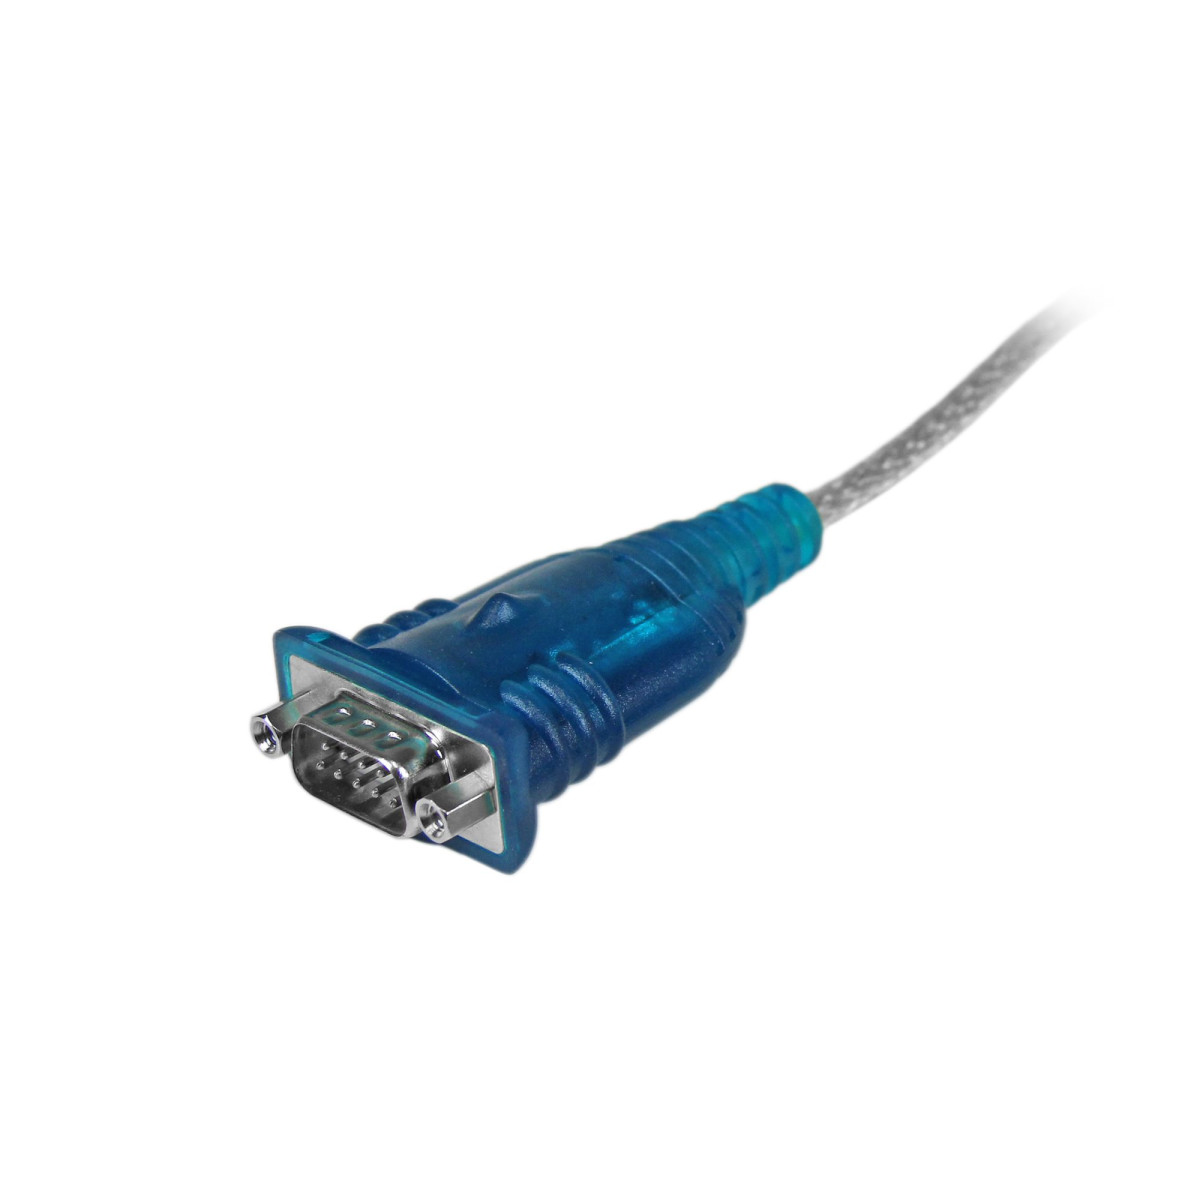 1Port USB-RS232 DB9 Serial Adpt Cable